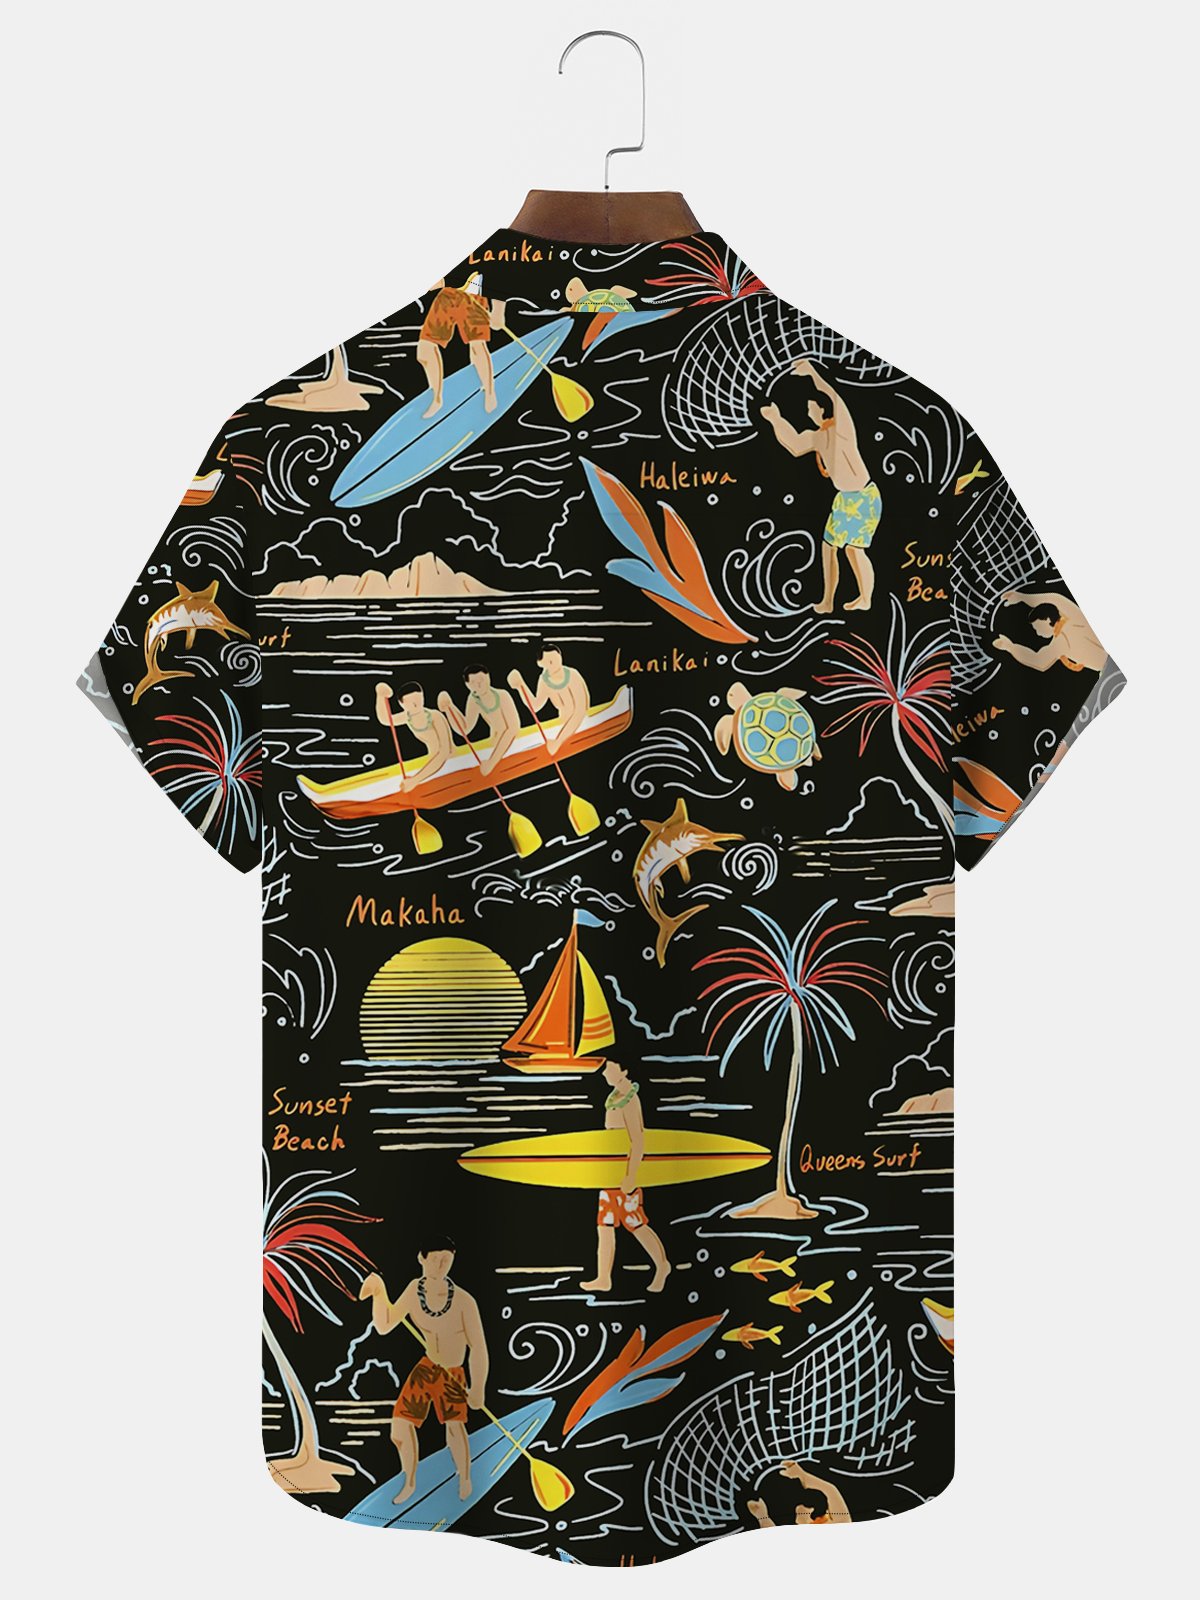 Royaura Hawaii Surf Island Vacation Print Men's Button Pocket Shirt